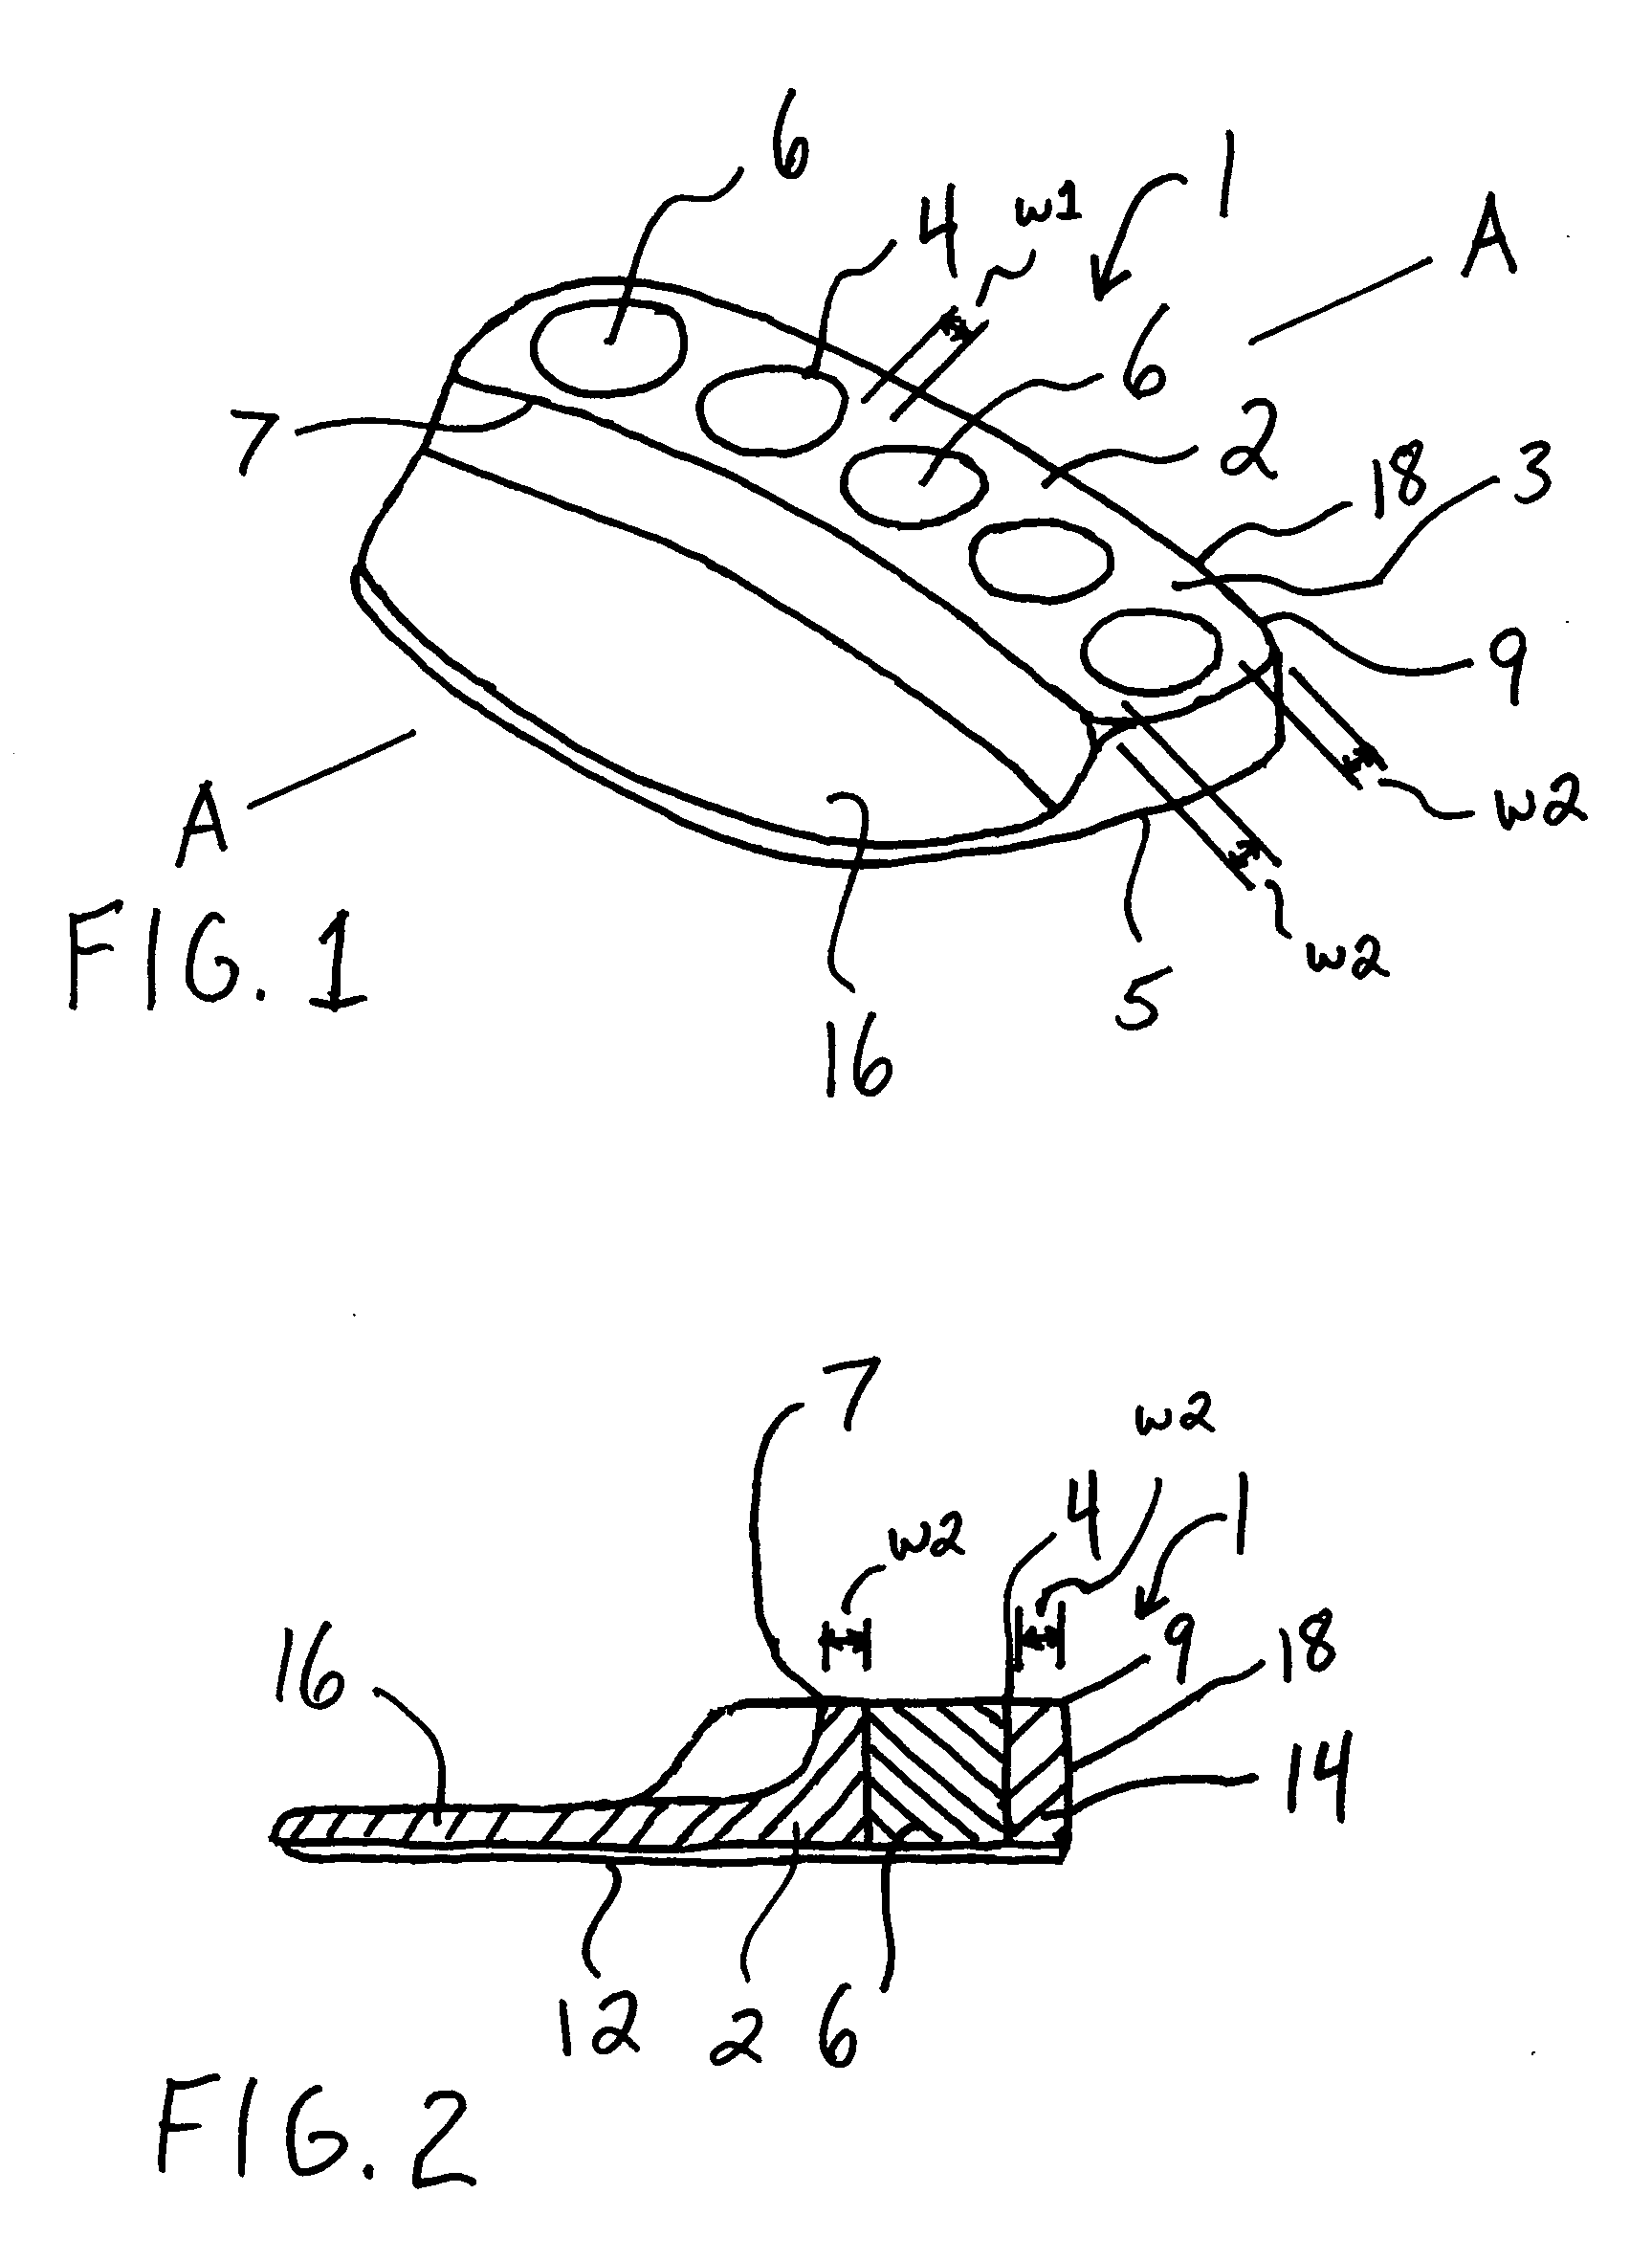 Spark-emitting device for a skateboard